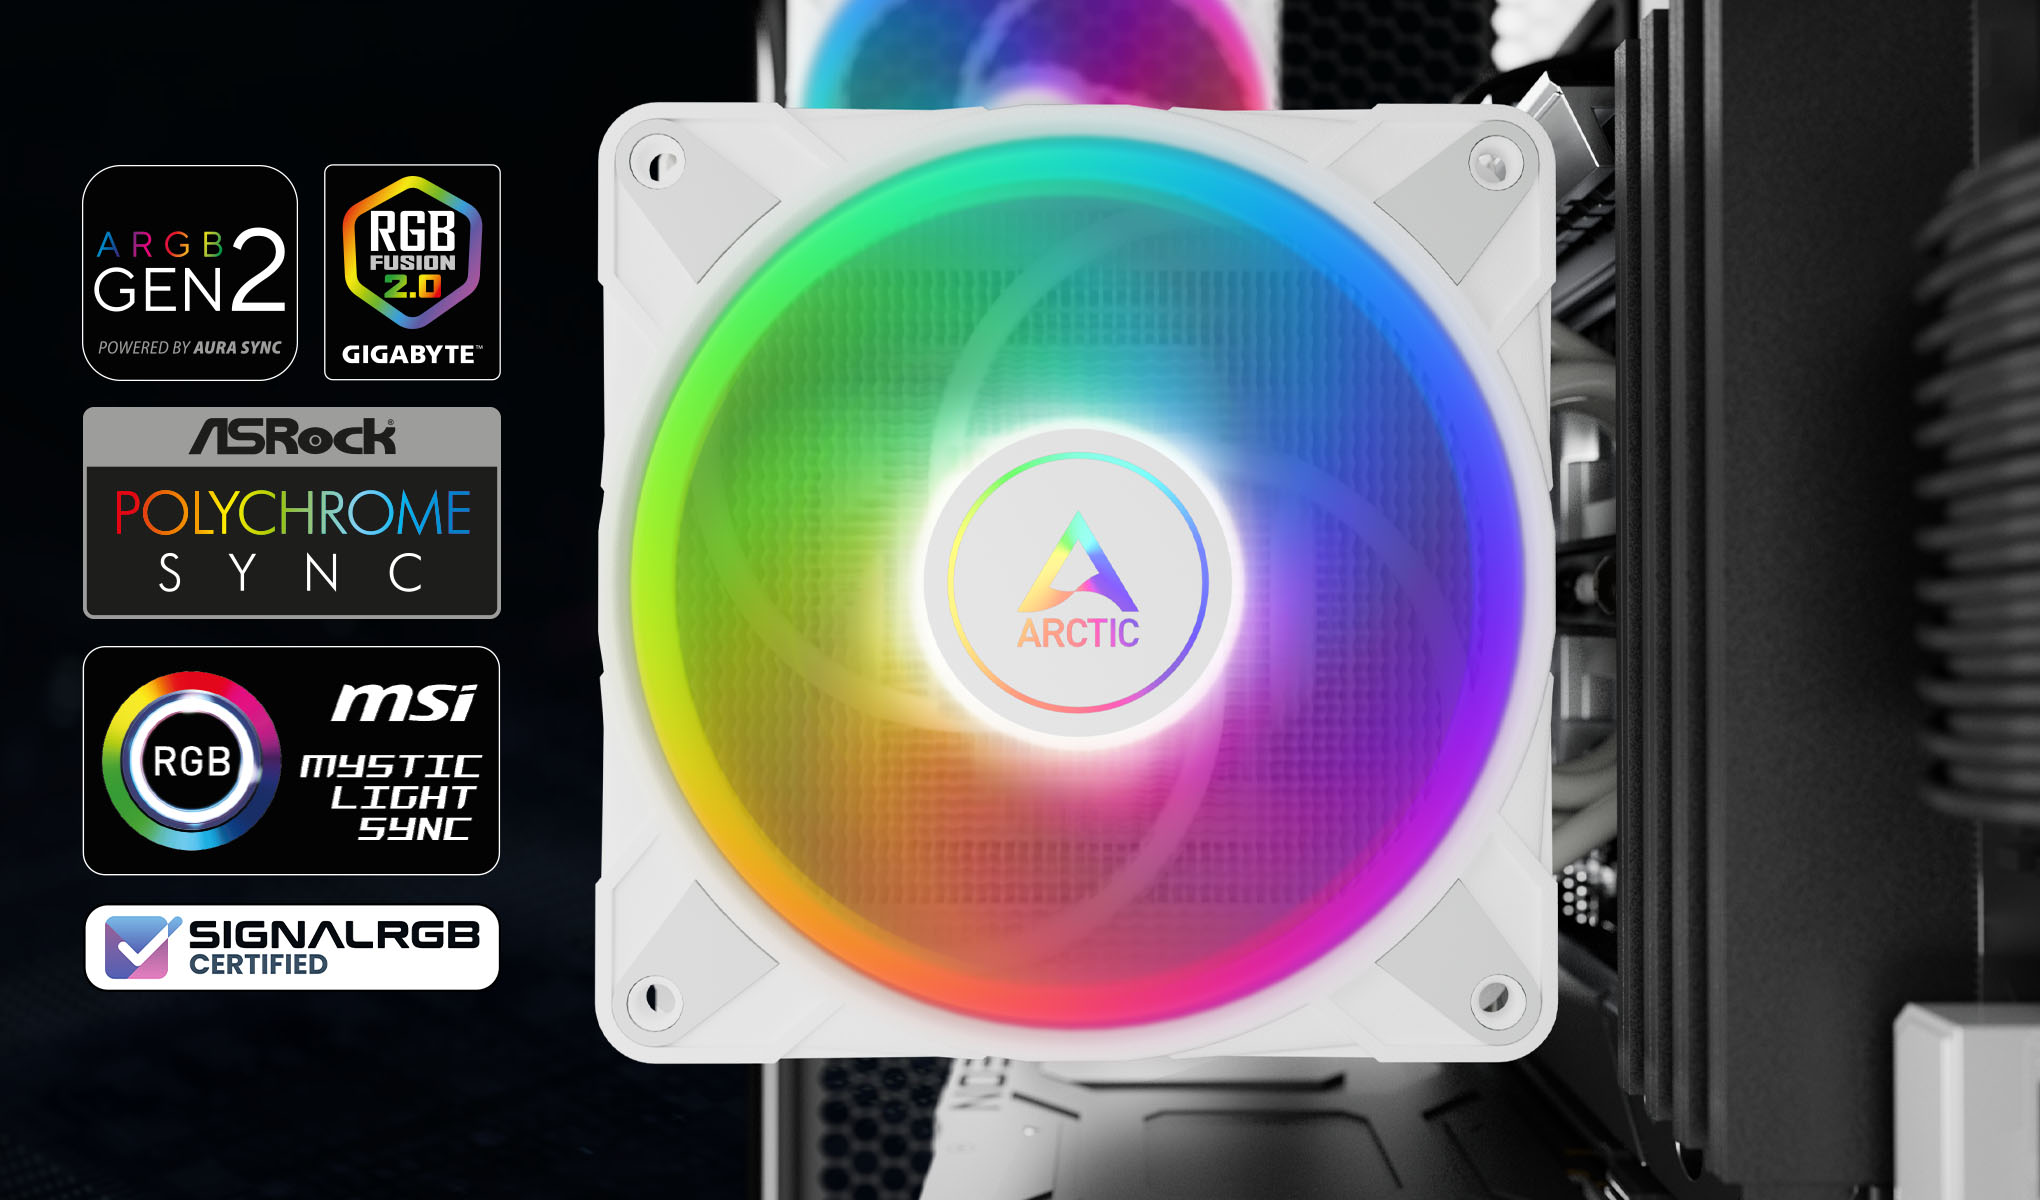 Freezer 36 A-RGB: High Static Pressure and Impressive Colours